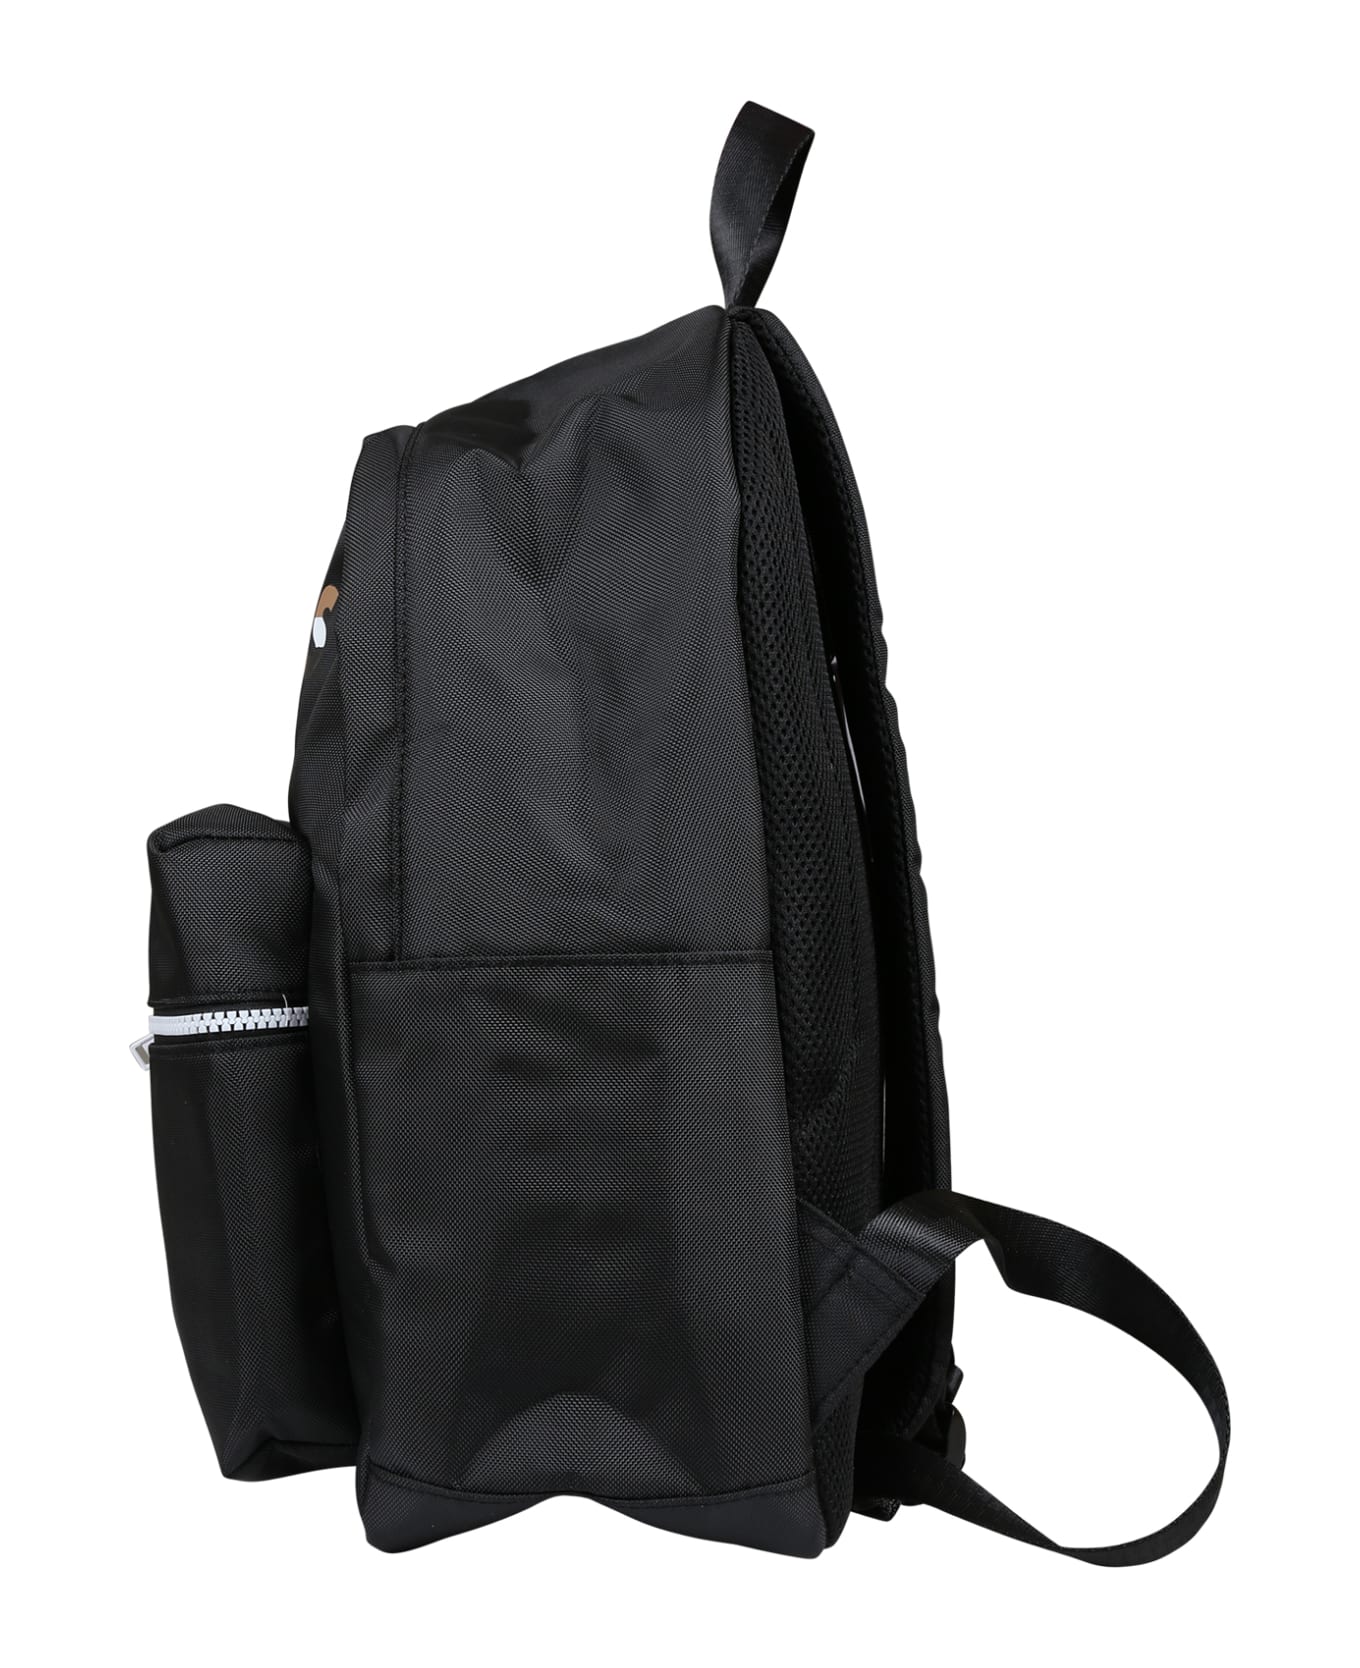 Hugo Boss Black Backpack For Boy With Logo - Black